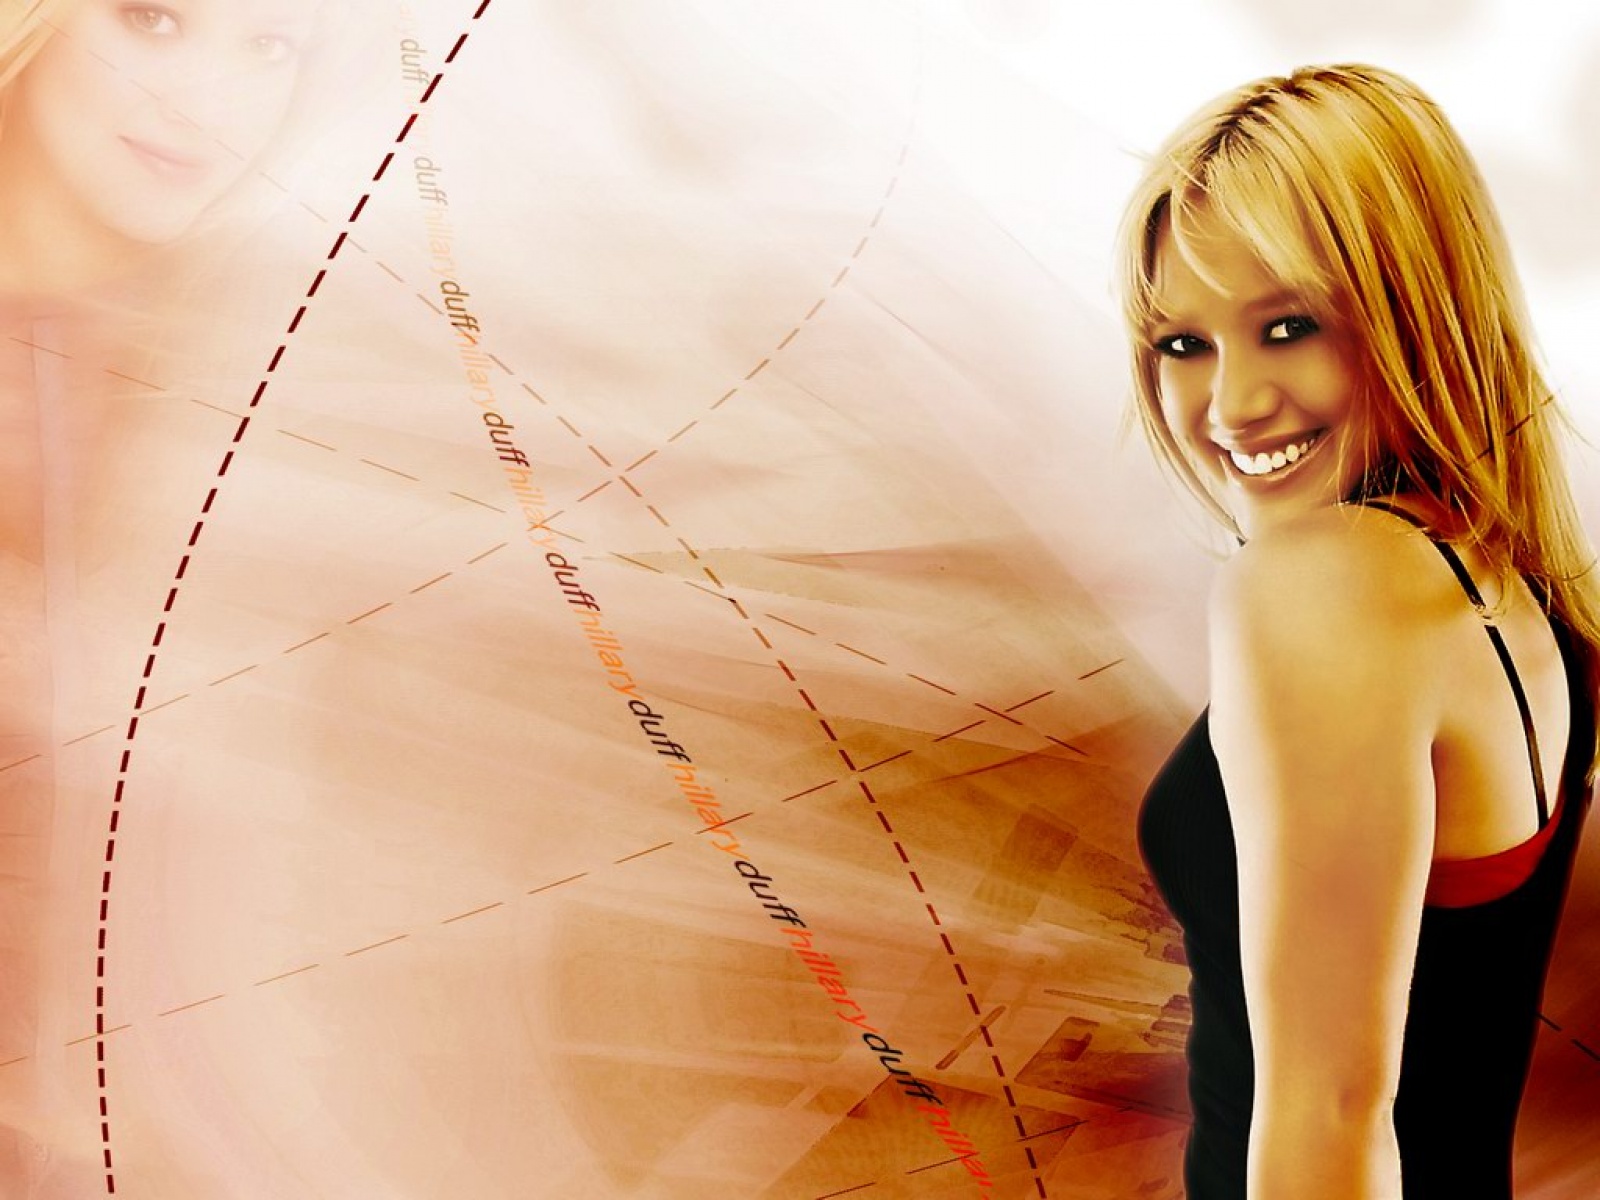 Best Hilary Duff Images On Pinterest Hilary Duff Hilary 2